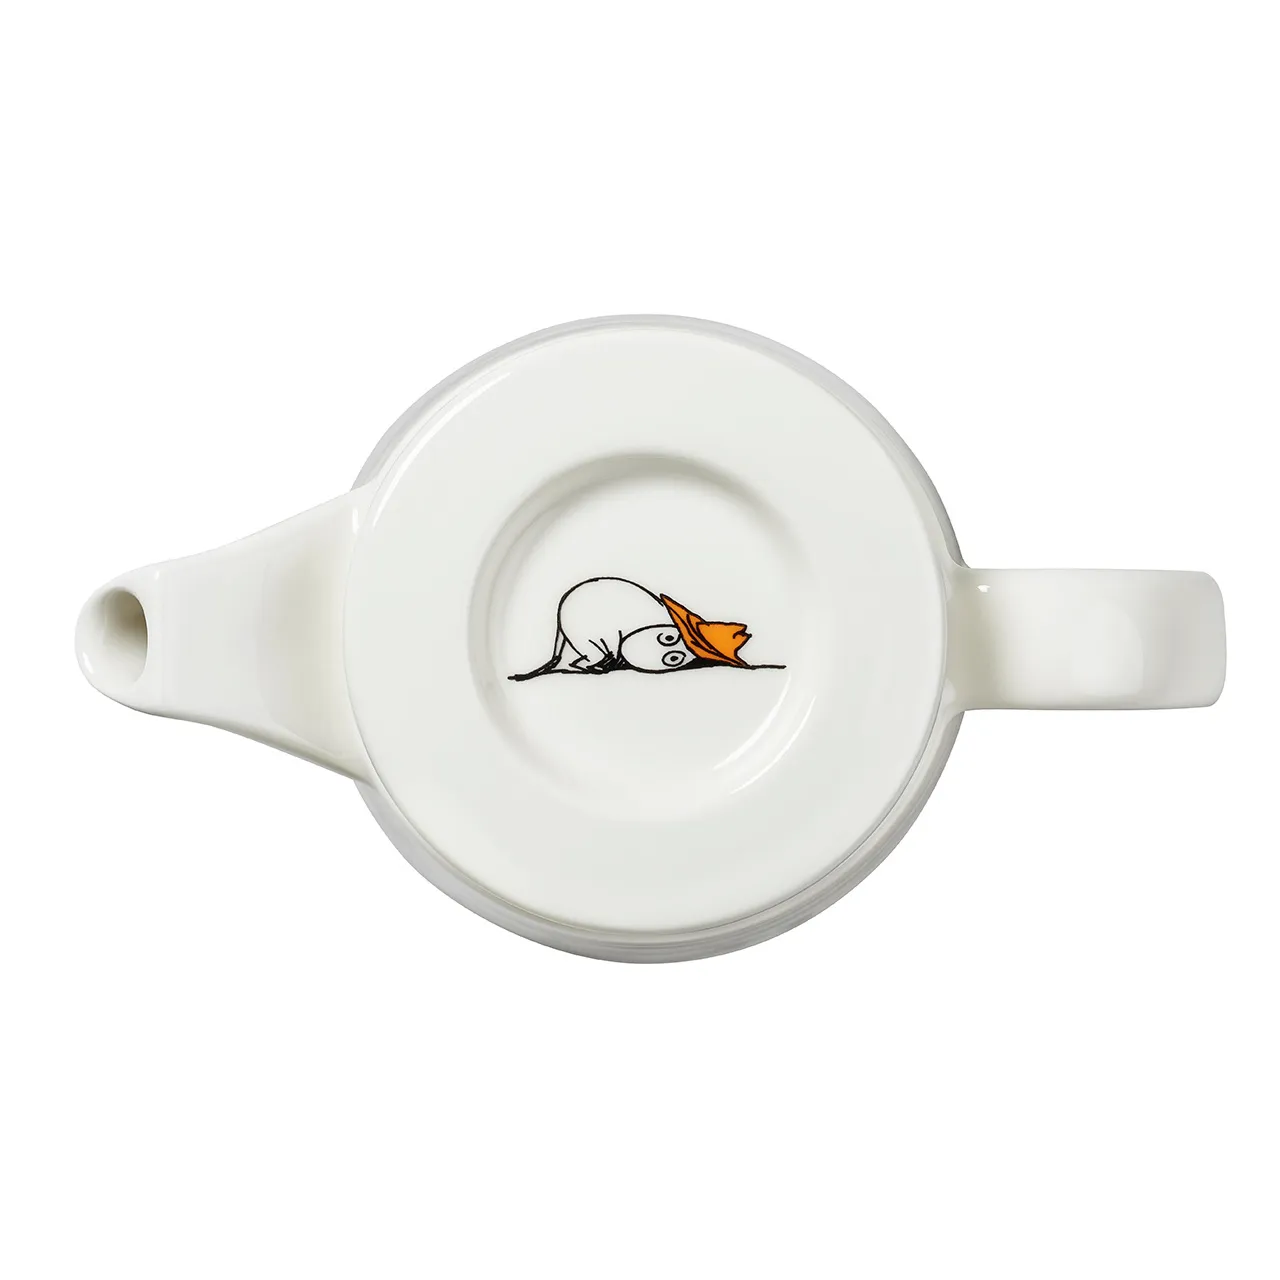 1059571_Moomin_moomin-rue-to-its-origins-teapot_03.jpg